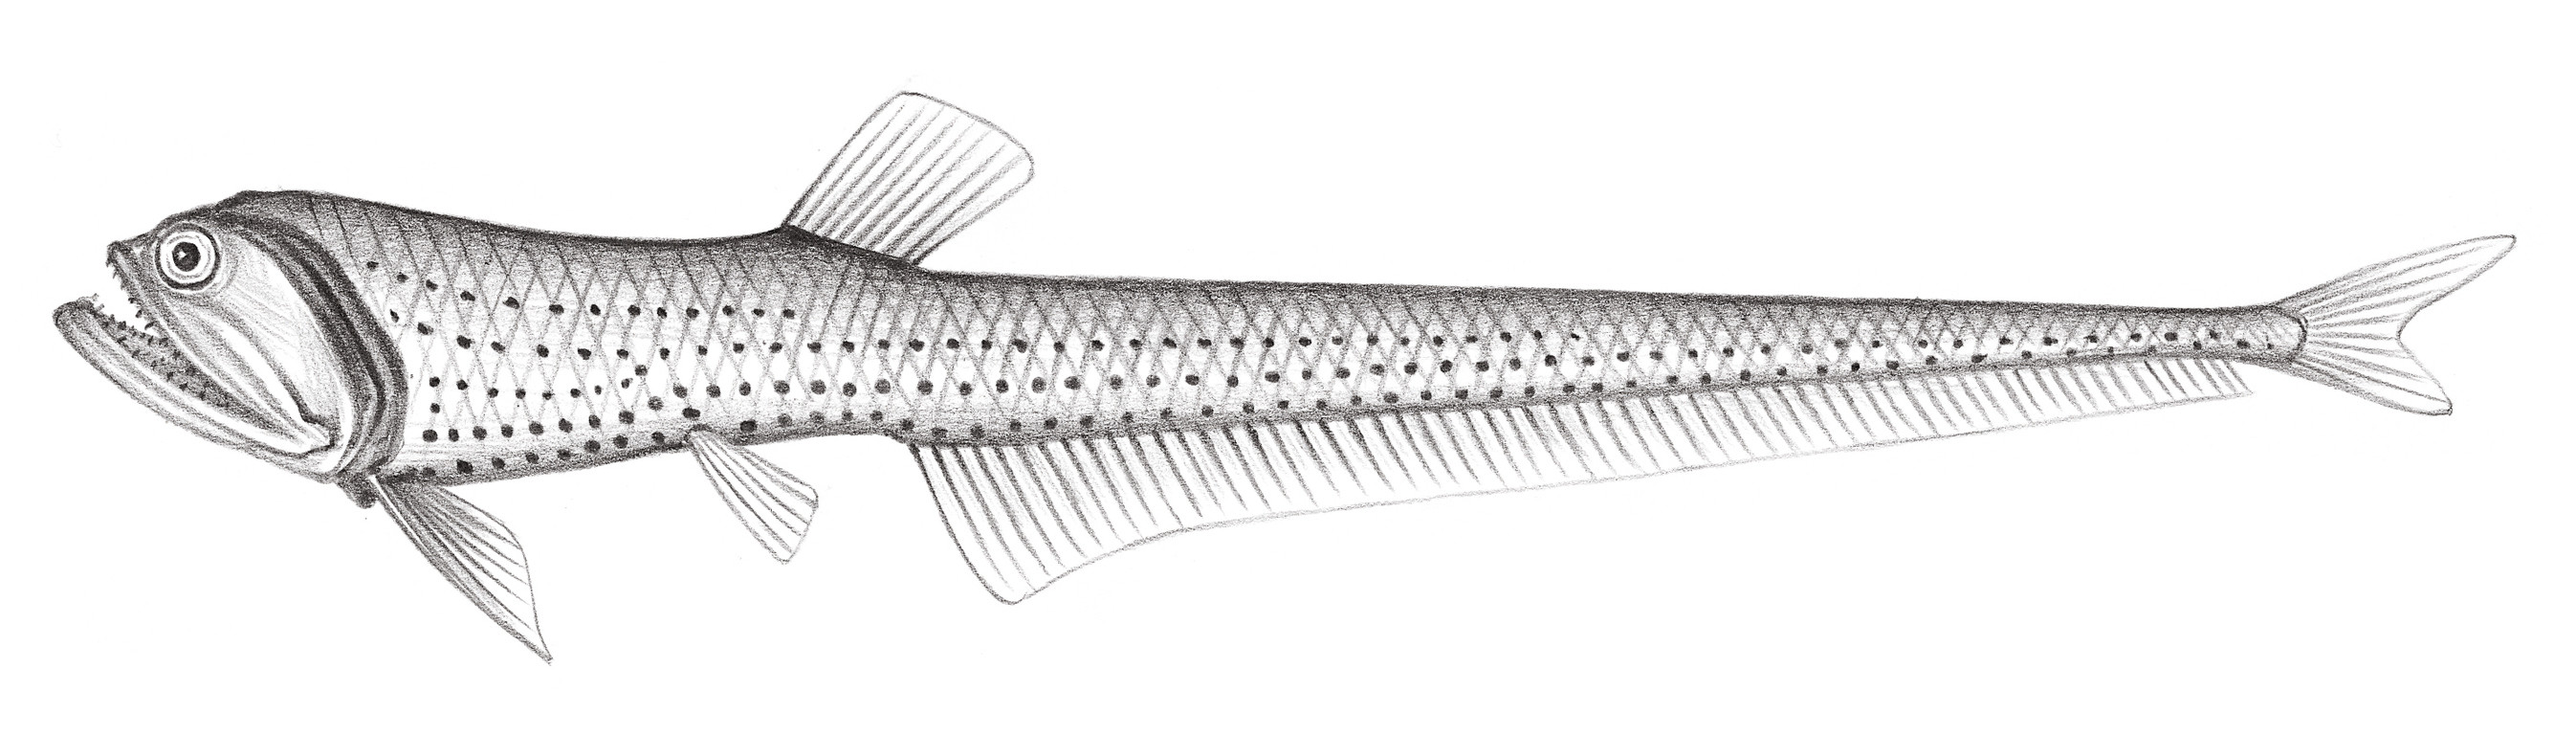 400.	海氏三光魚 Triplophos hemingi (MeArdle, 1901)